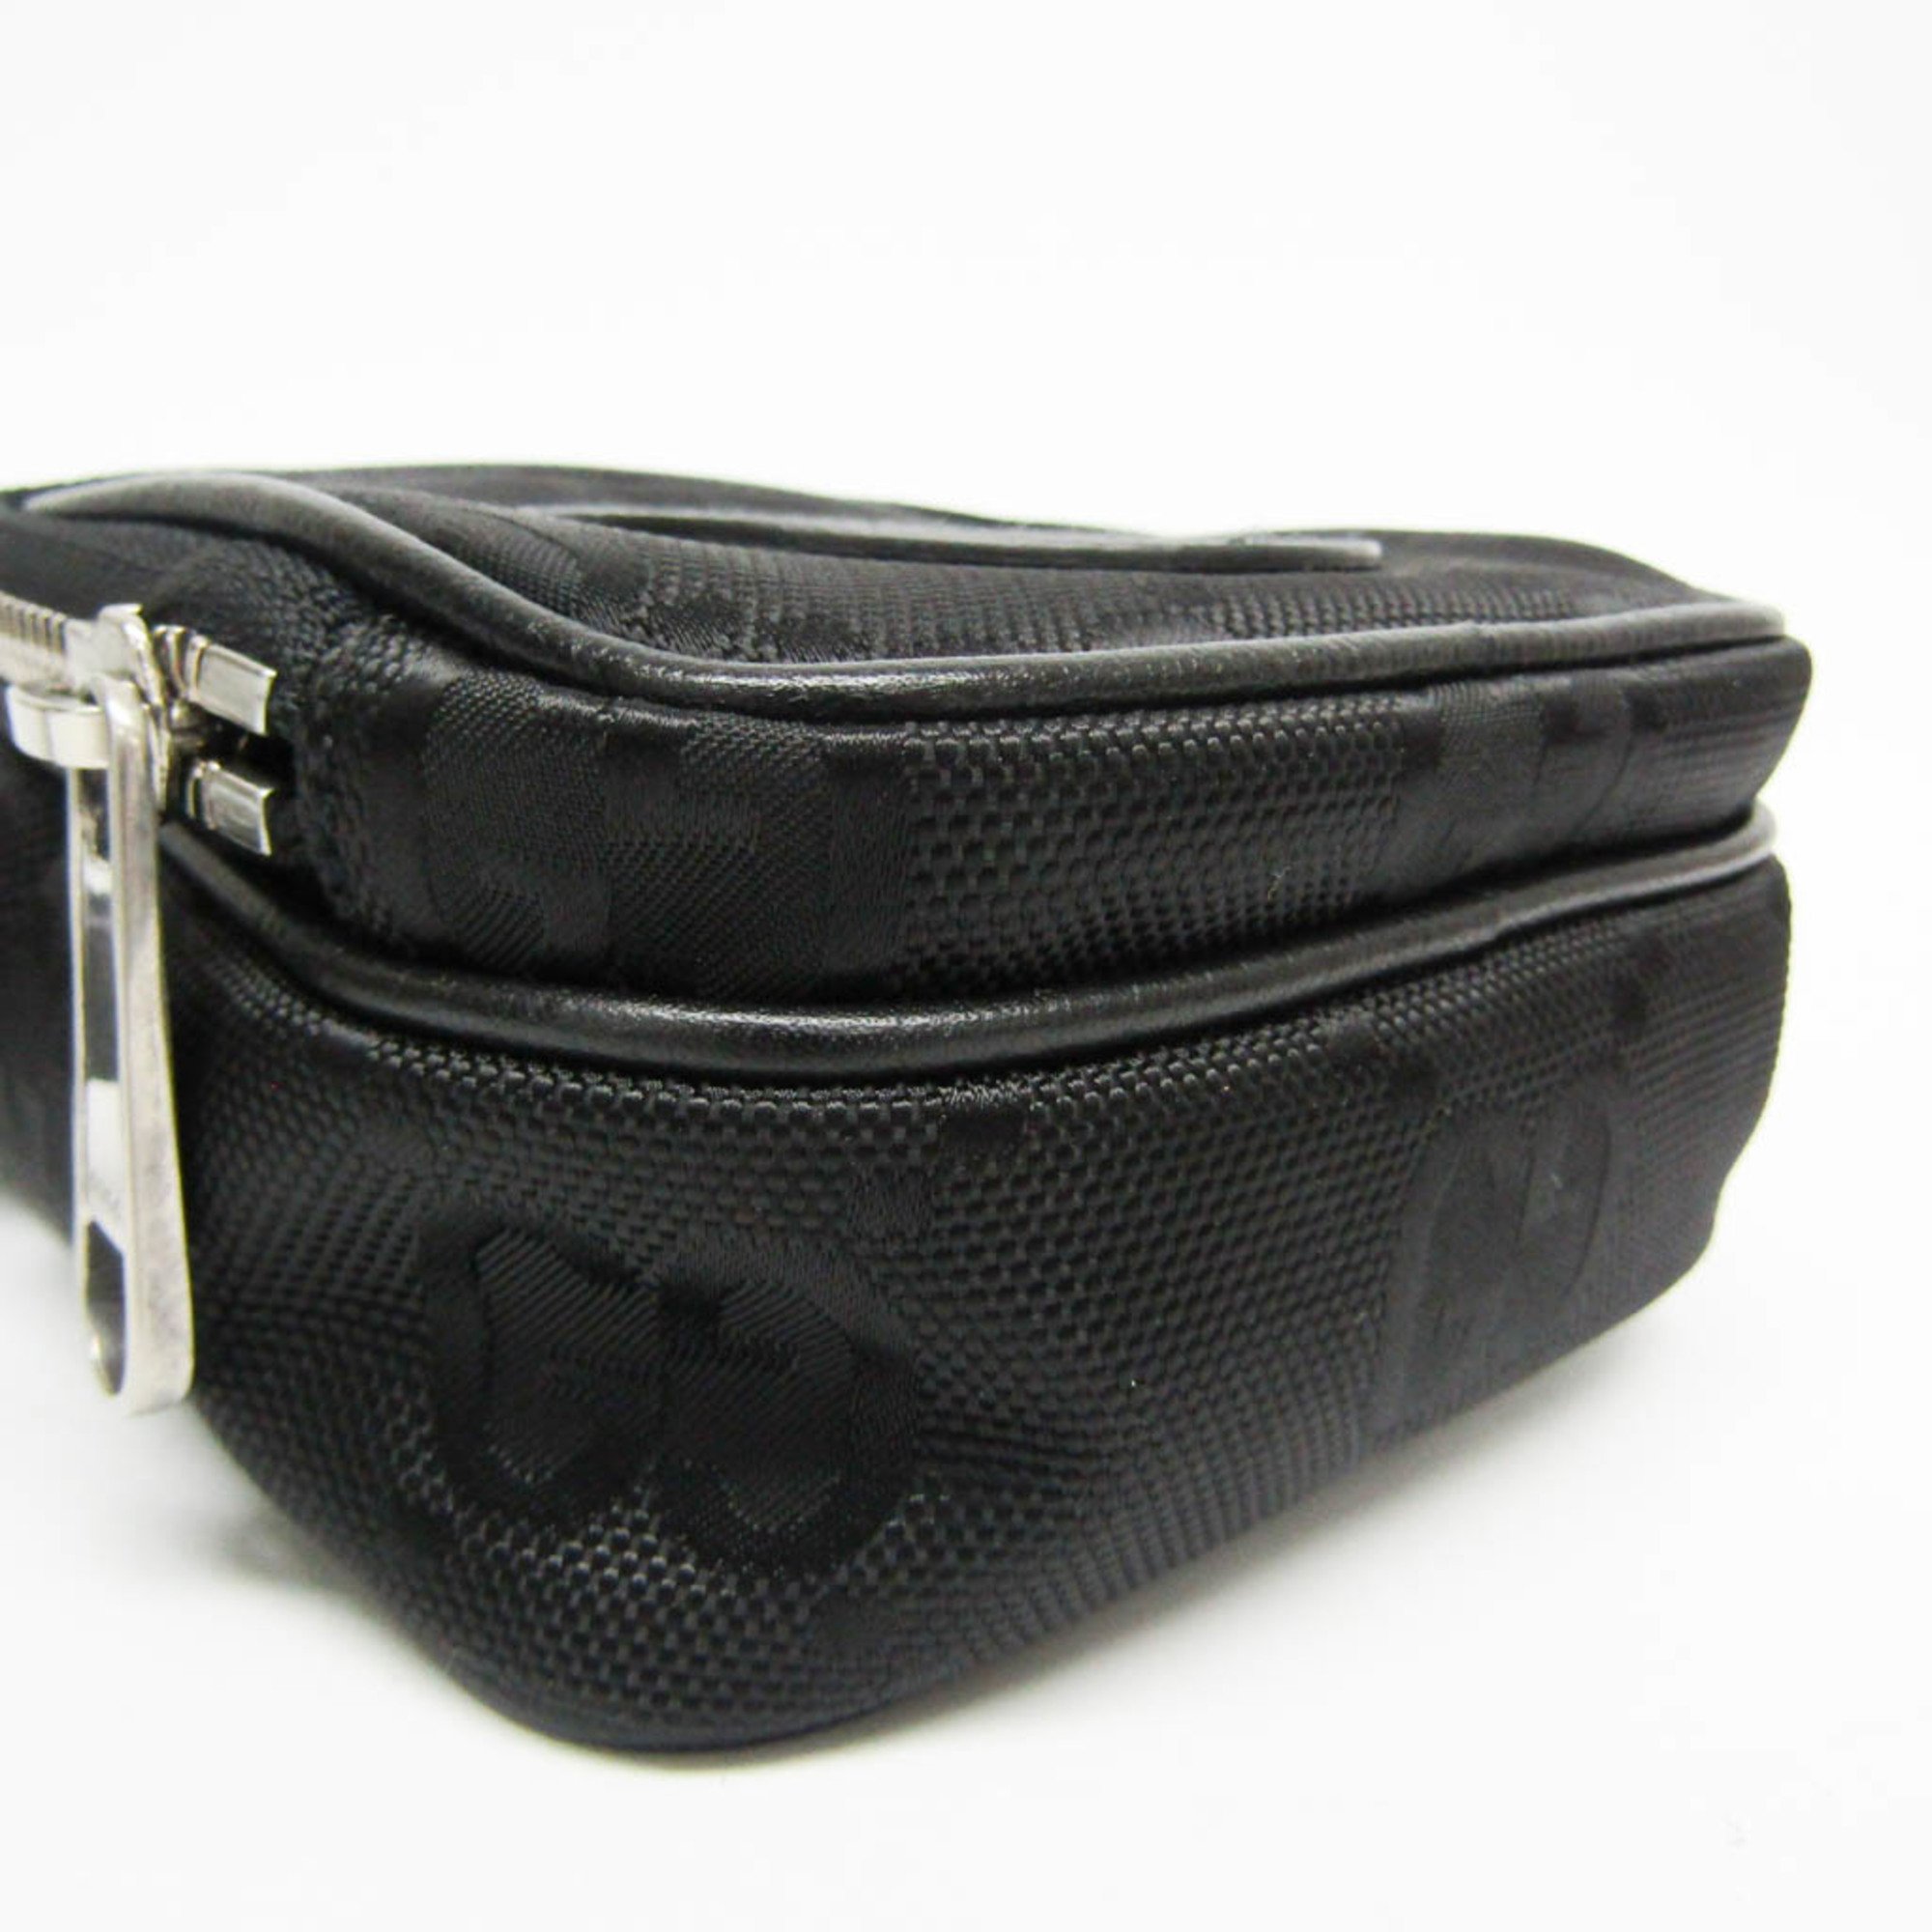 Gucci Off The Grid 643882 Women's Leather,Nylon Canvas Shoulder Bag Black